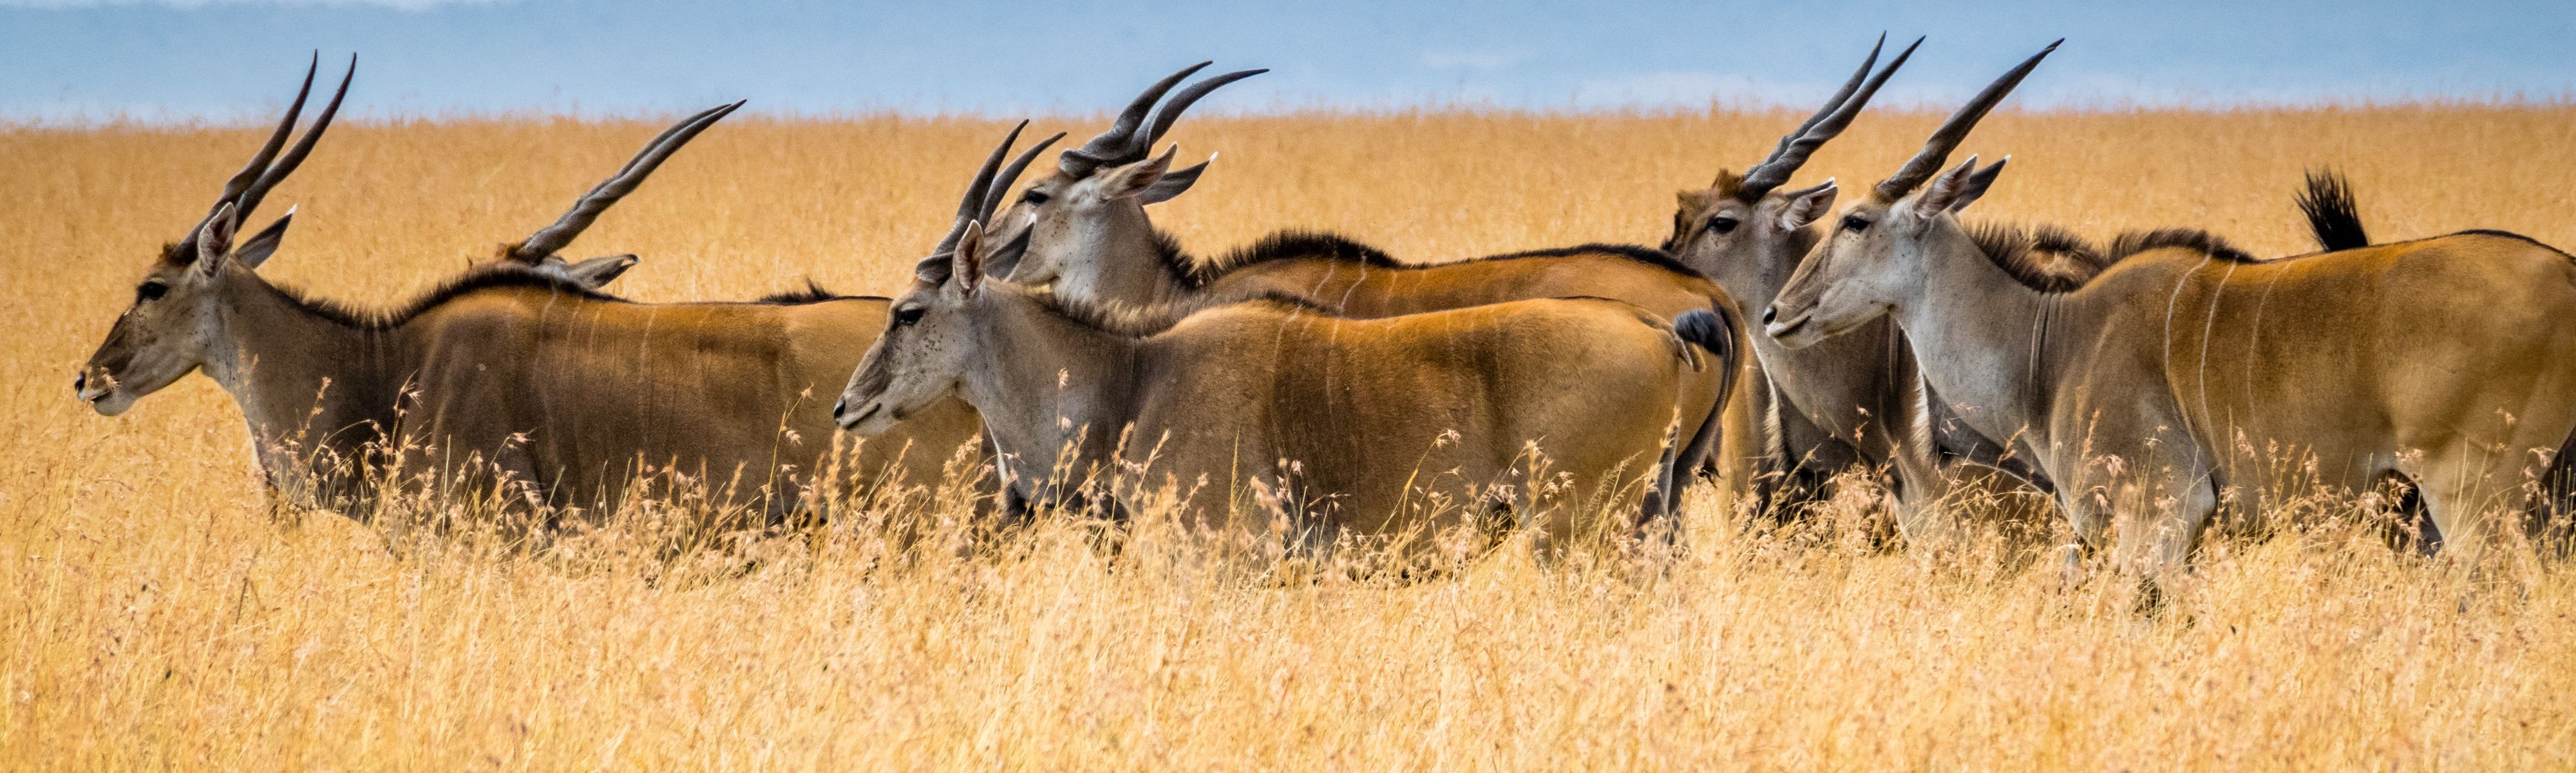 antelope in the masai mara in kenya africa